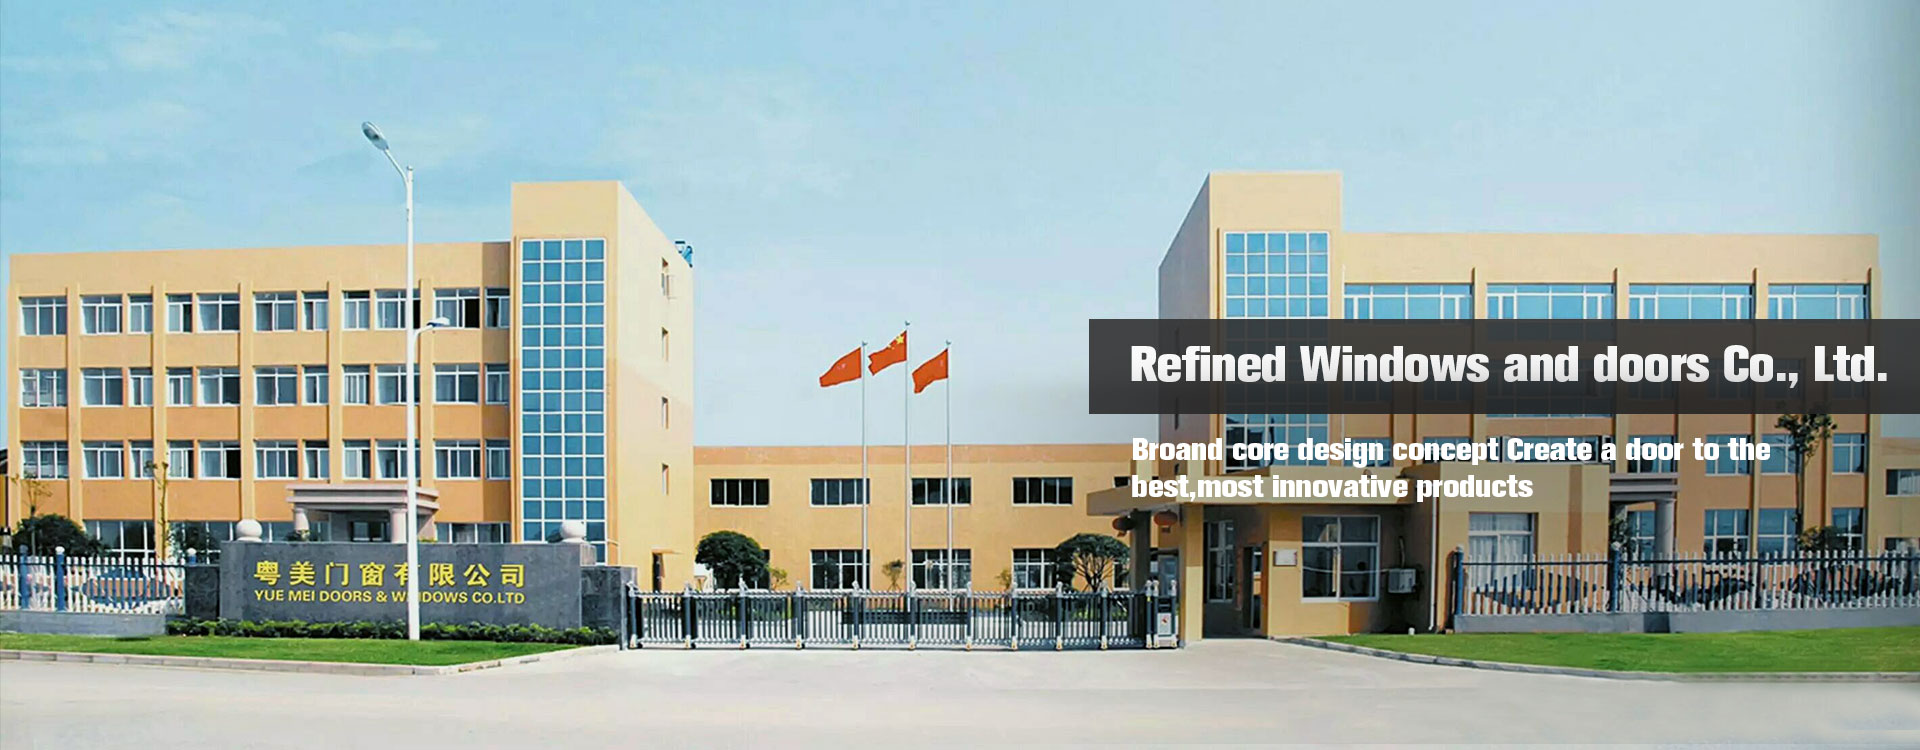 Refined Windows and Doors Co., Ltd.